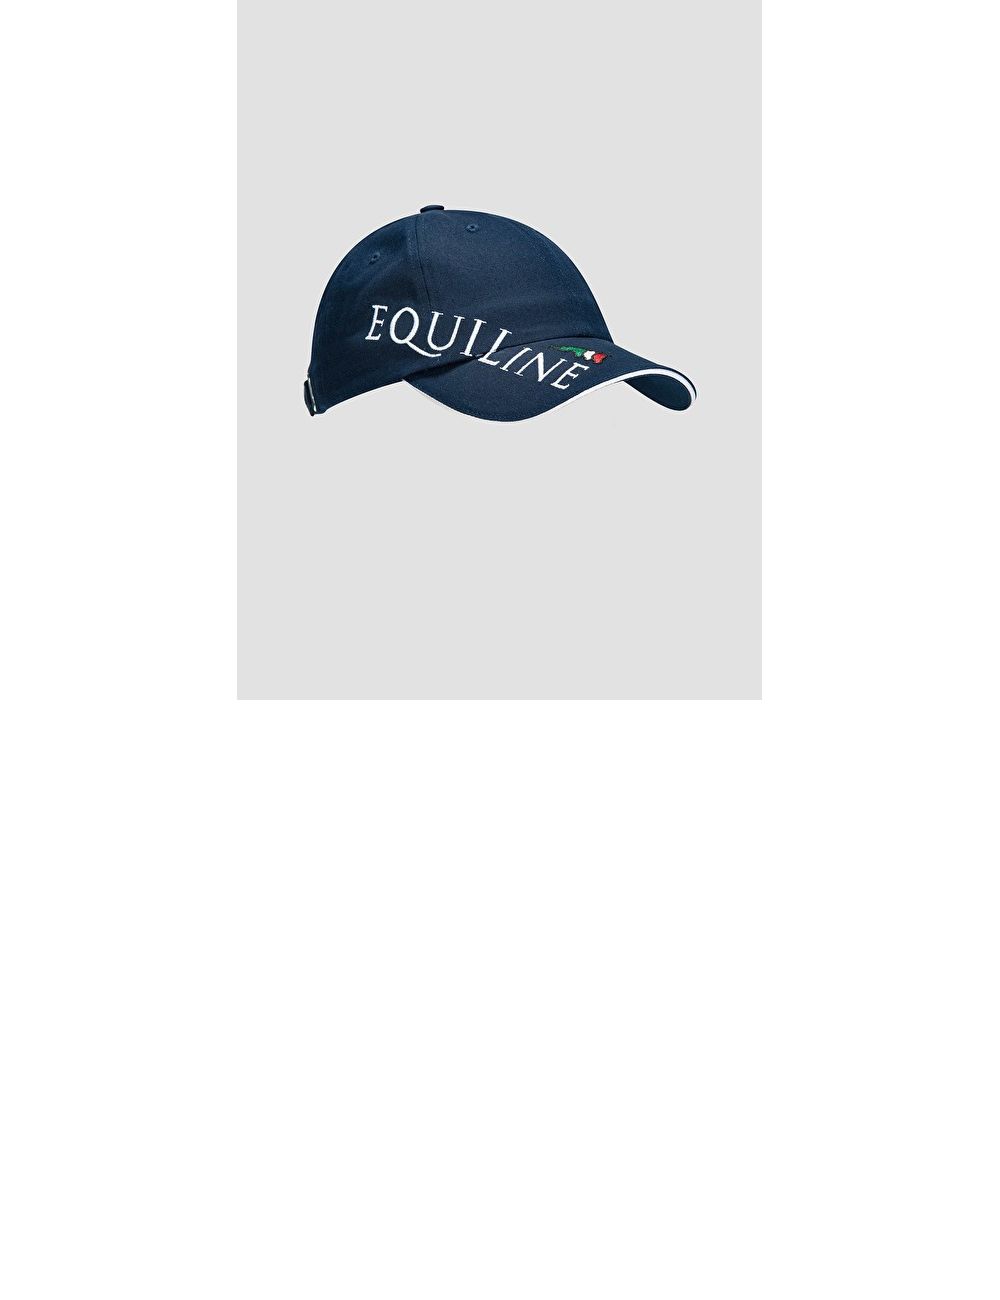 Equiline Verstellbare Kappe mit Equiline Logo Navy